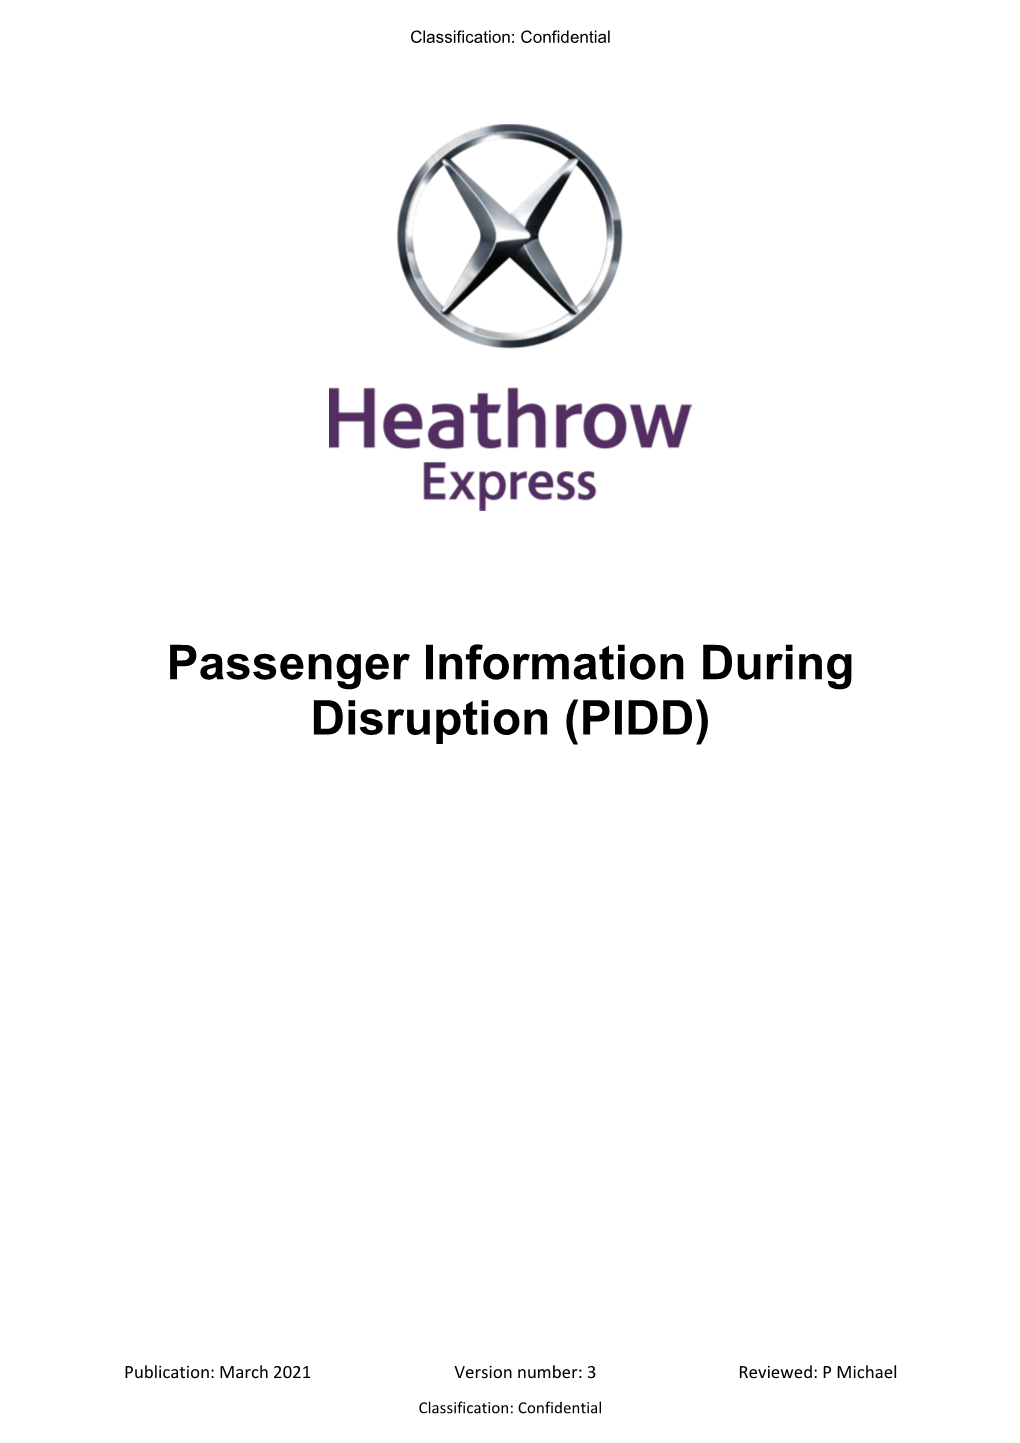 Passenger Information During Disruption (PIDD)